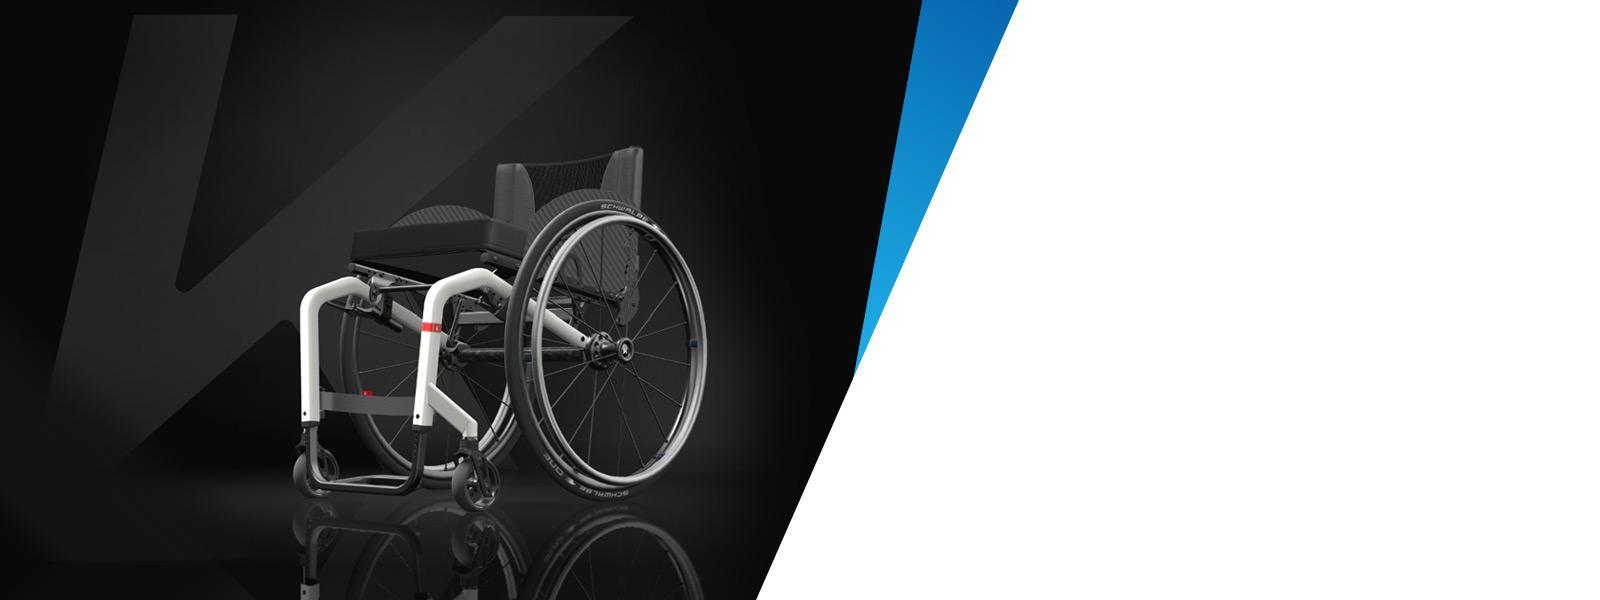 Kuschall 3D visualiser, build your wheelchair